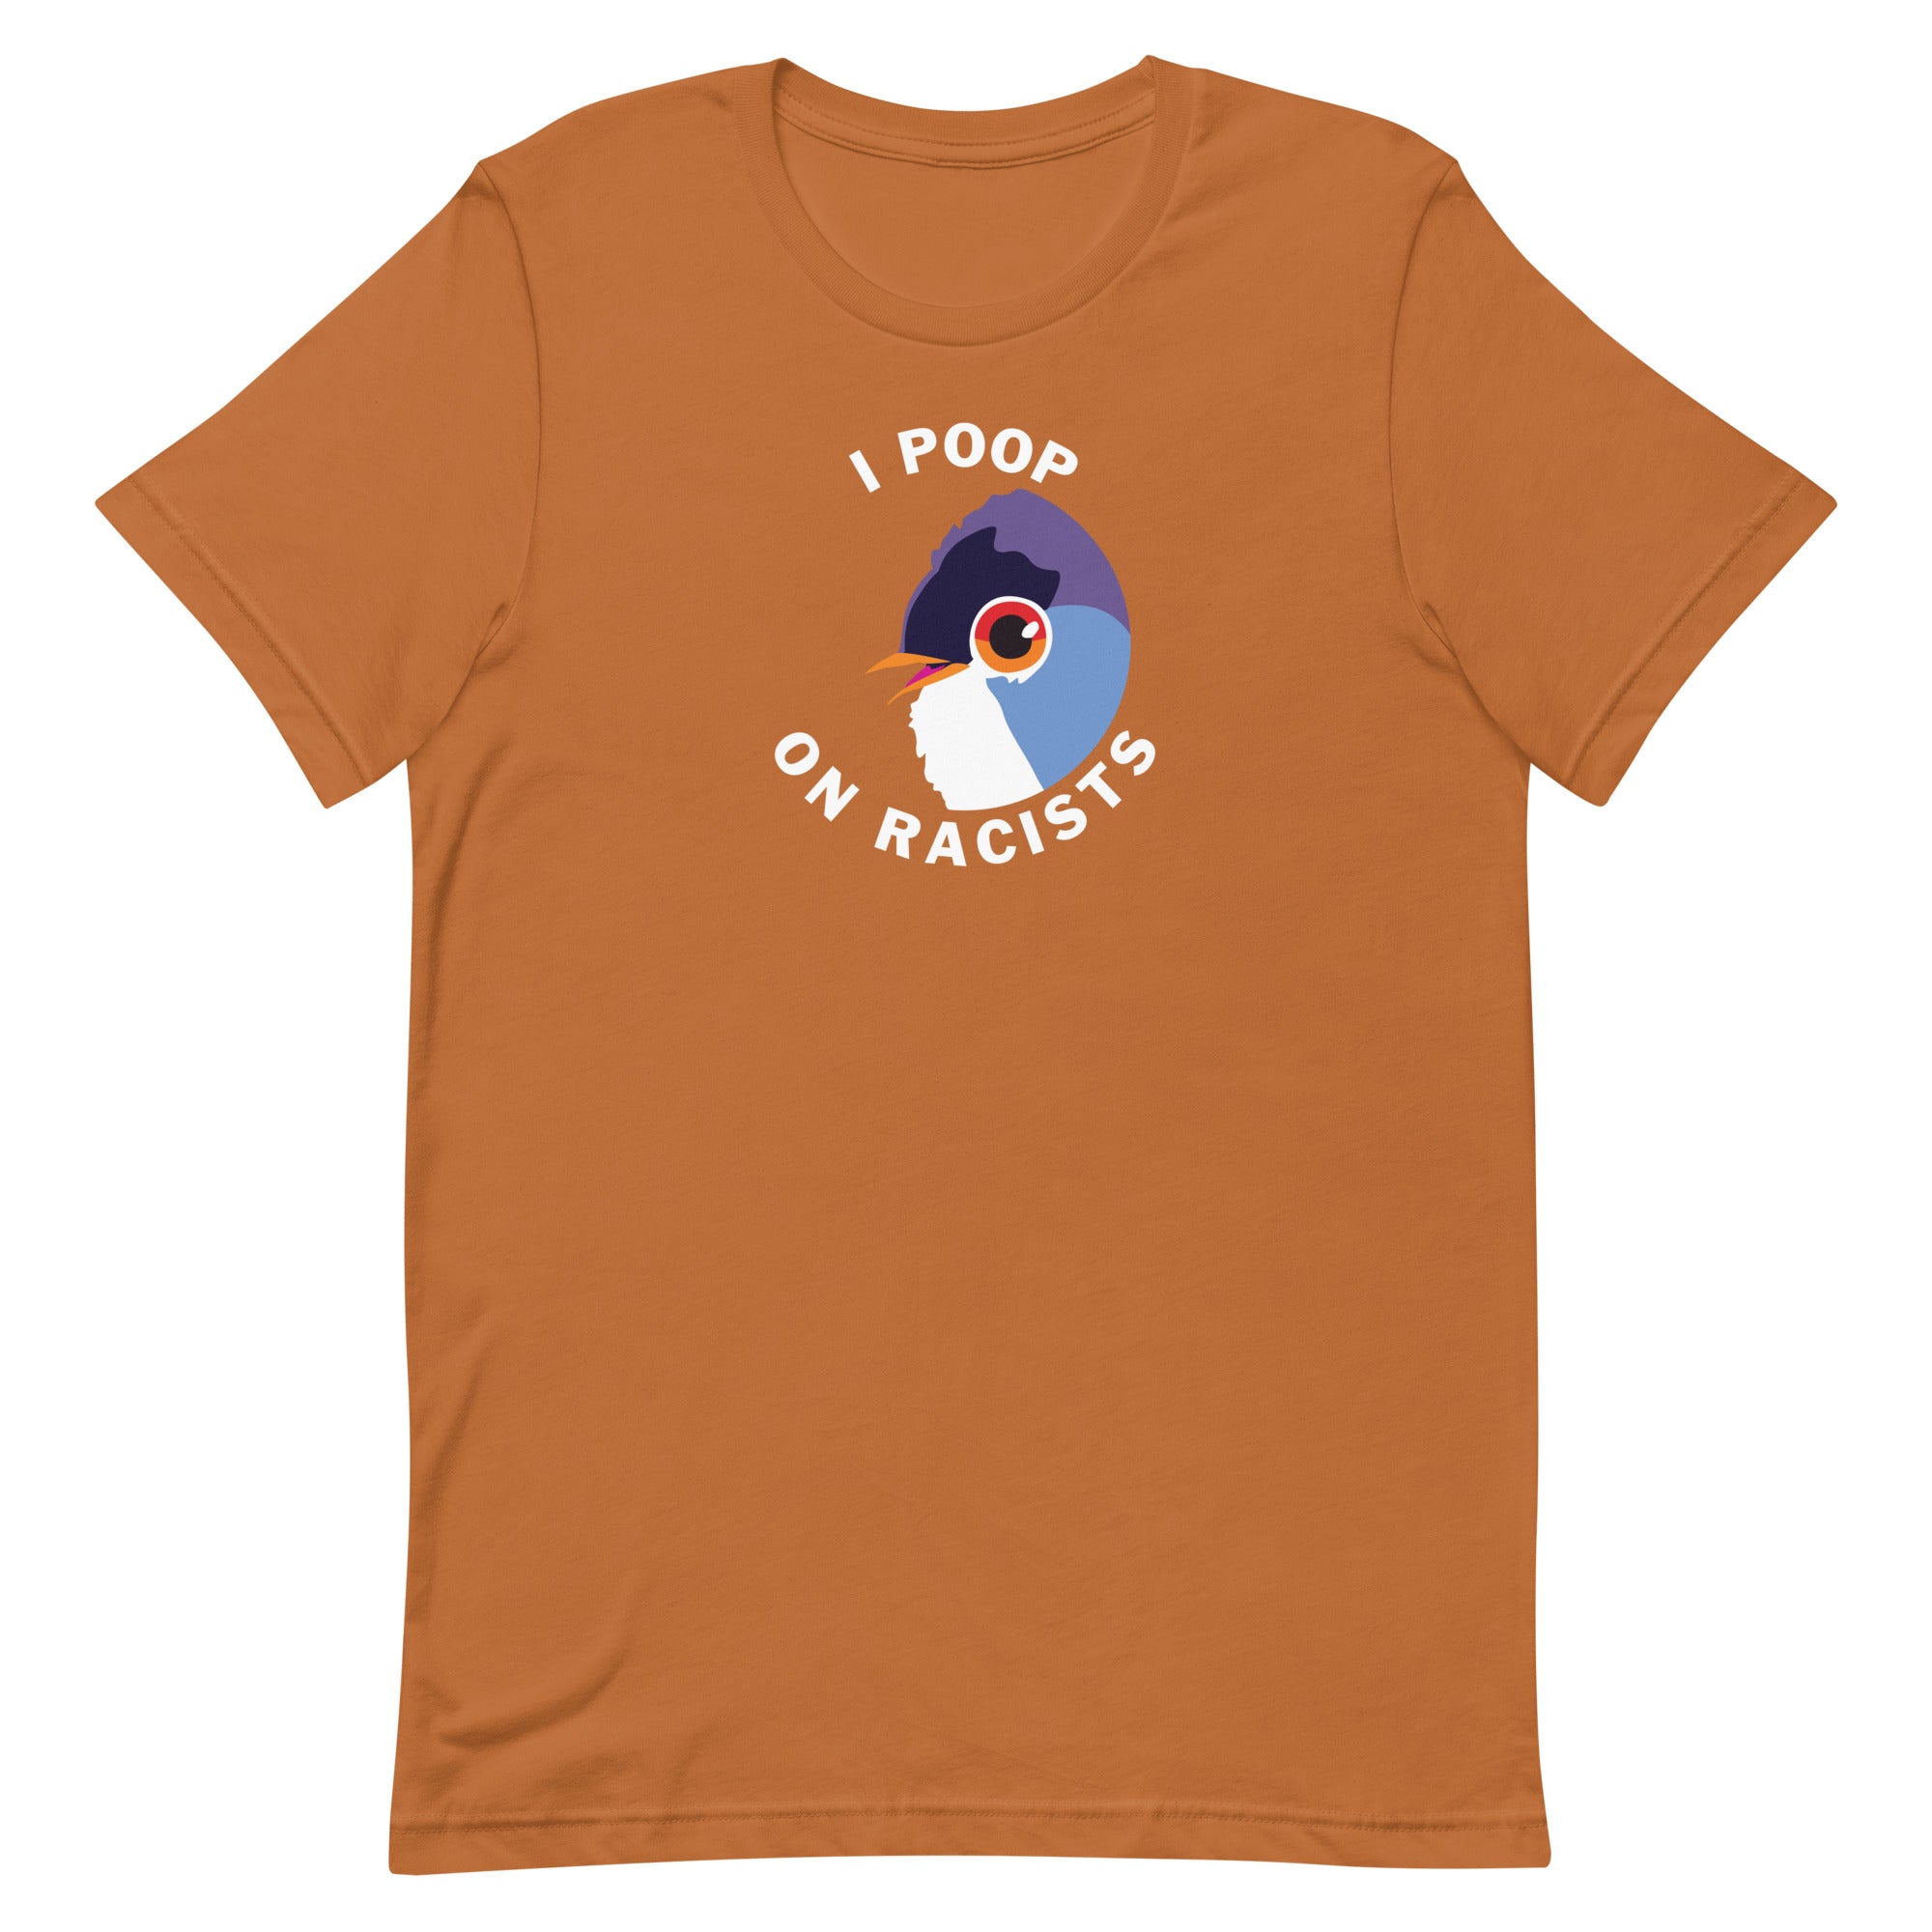 I Poop on Racists - Unisex T-Shirt